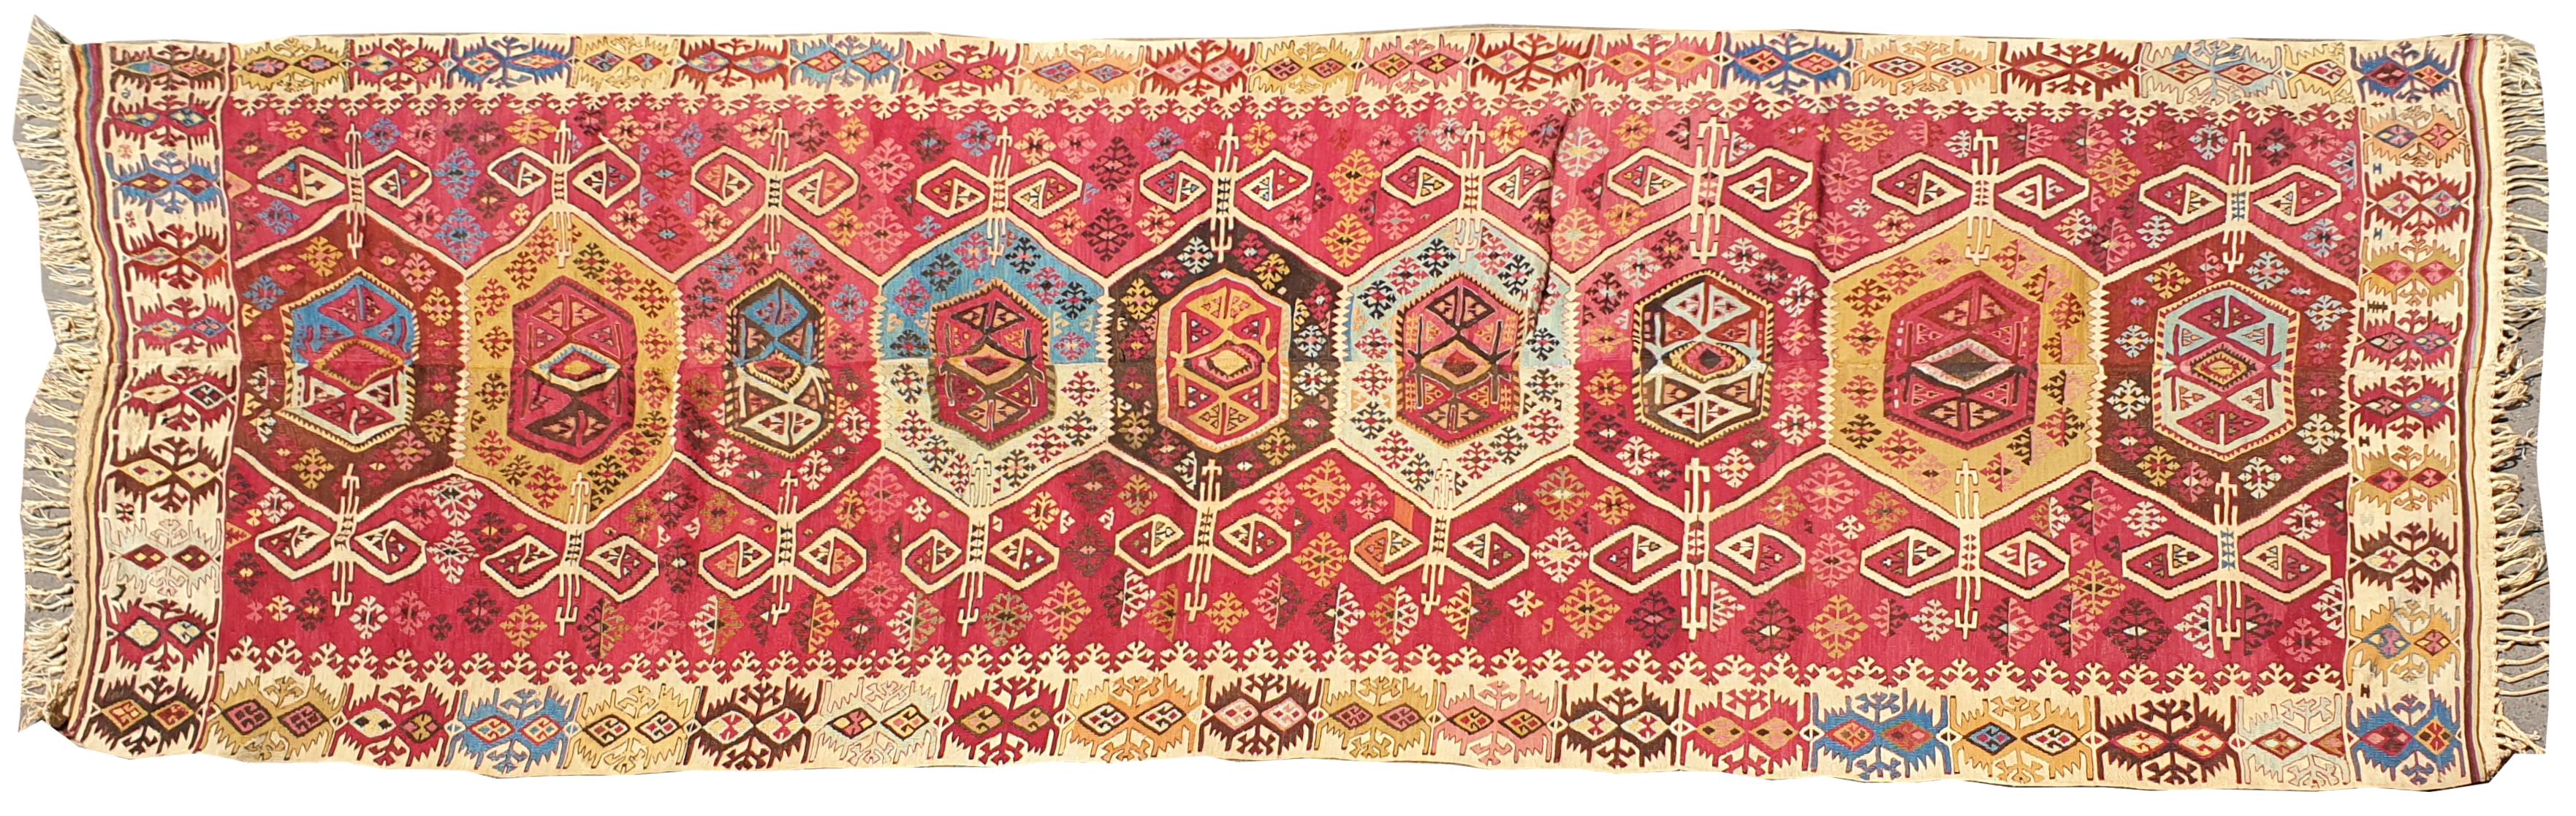 Turkestan 757 - 19th Century Turkish Kilim Carpet For Sale